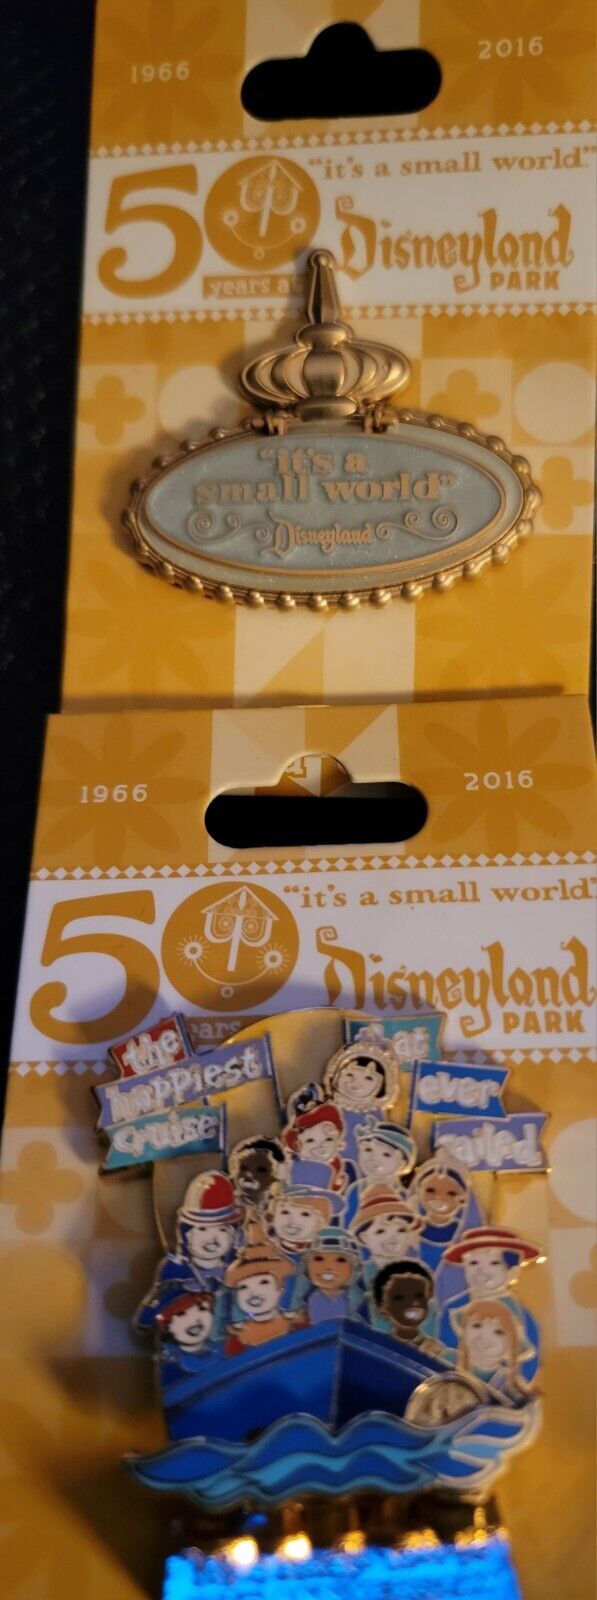 Disneyland 50th Anniversary It’s A Small World LE1500 Pins - 2 Pin Set